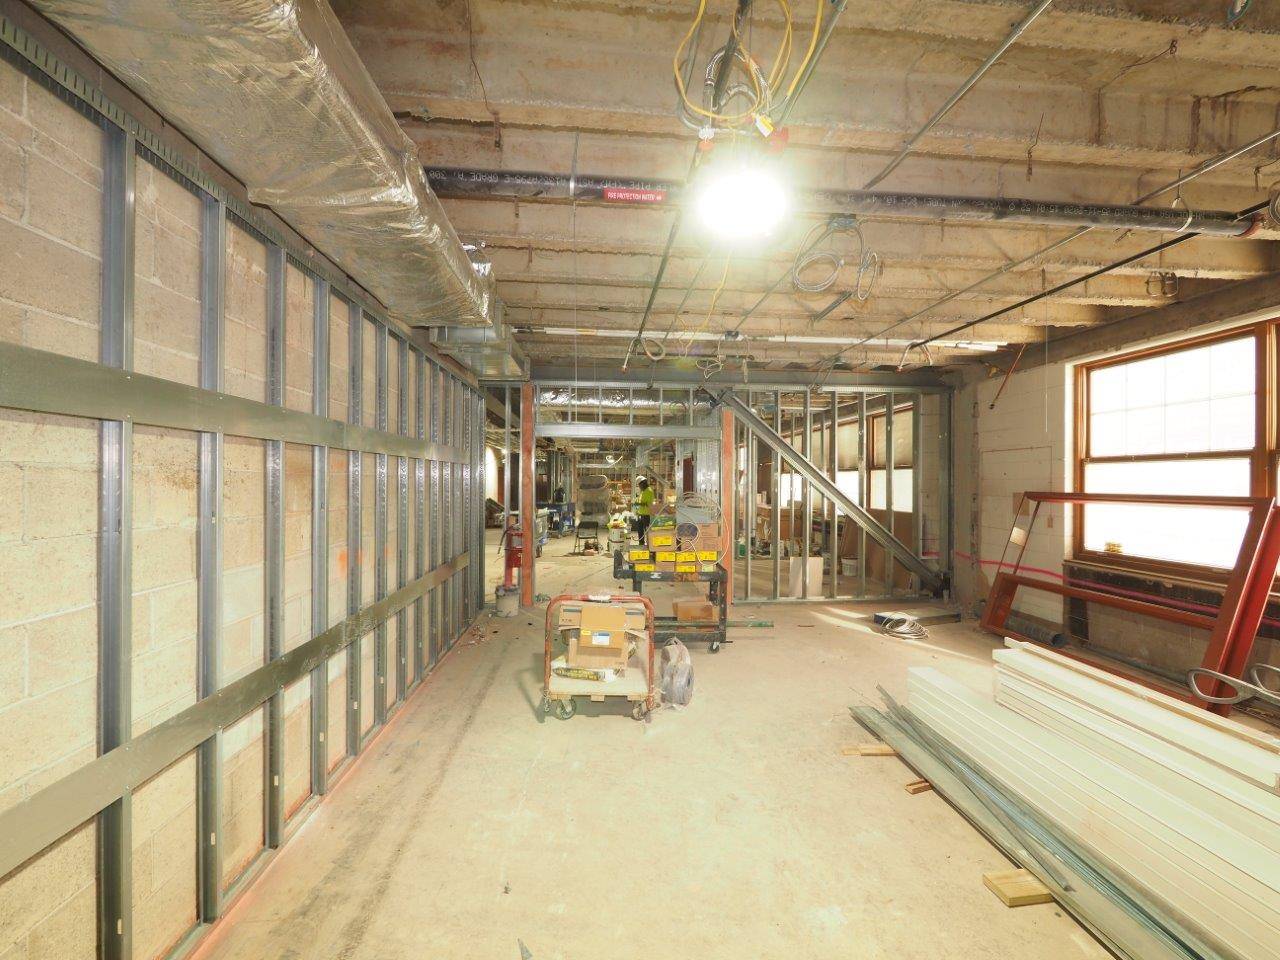 Inside the Barrington Elementary School renovation project